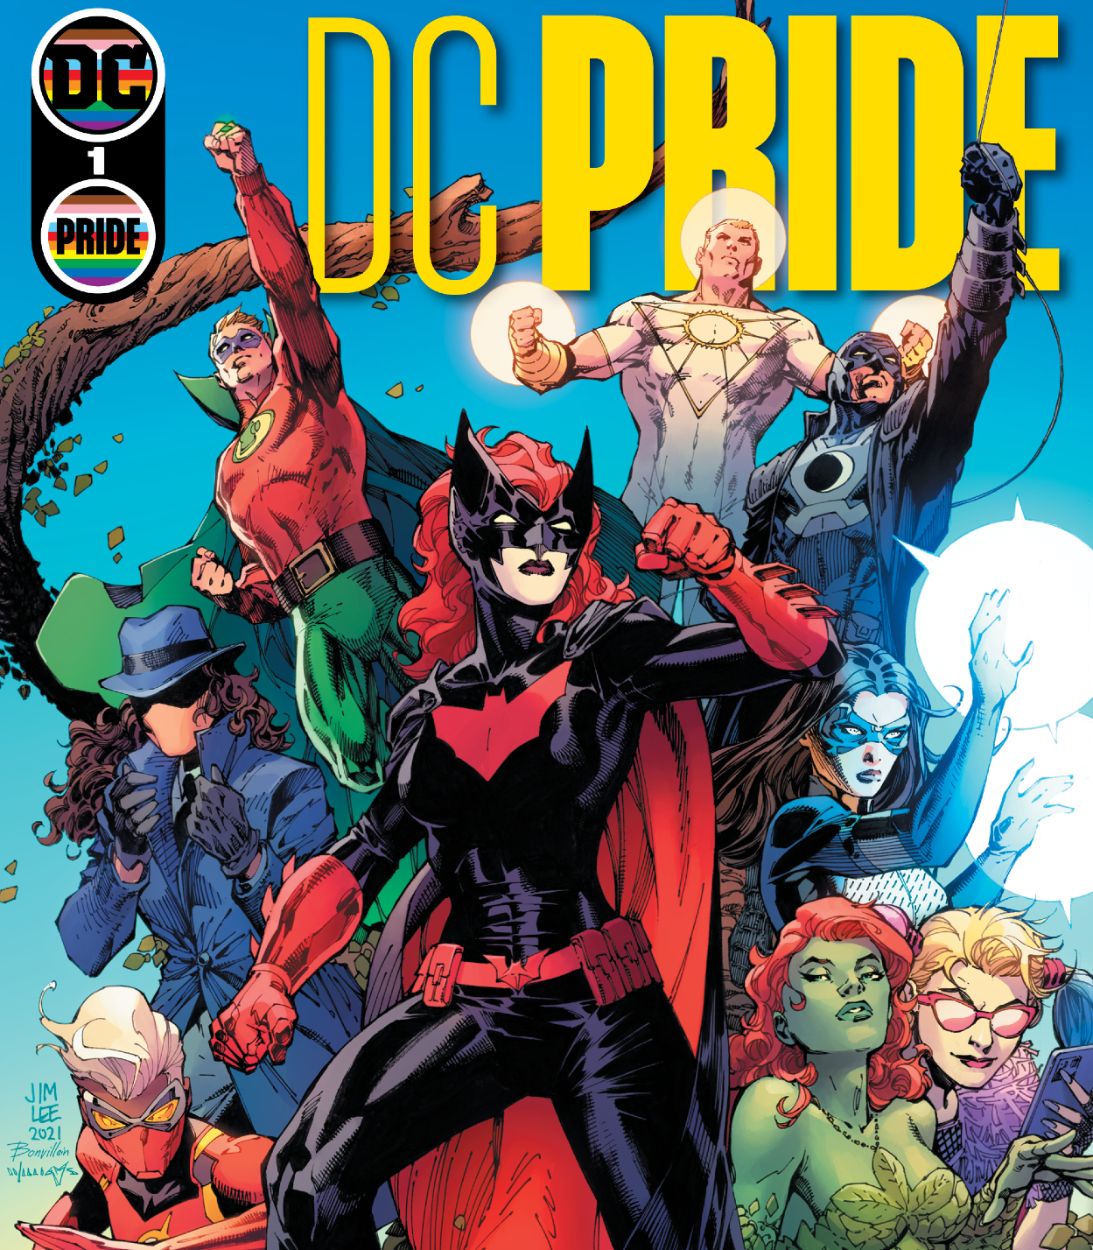 DC pride comic book cover art vertical